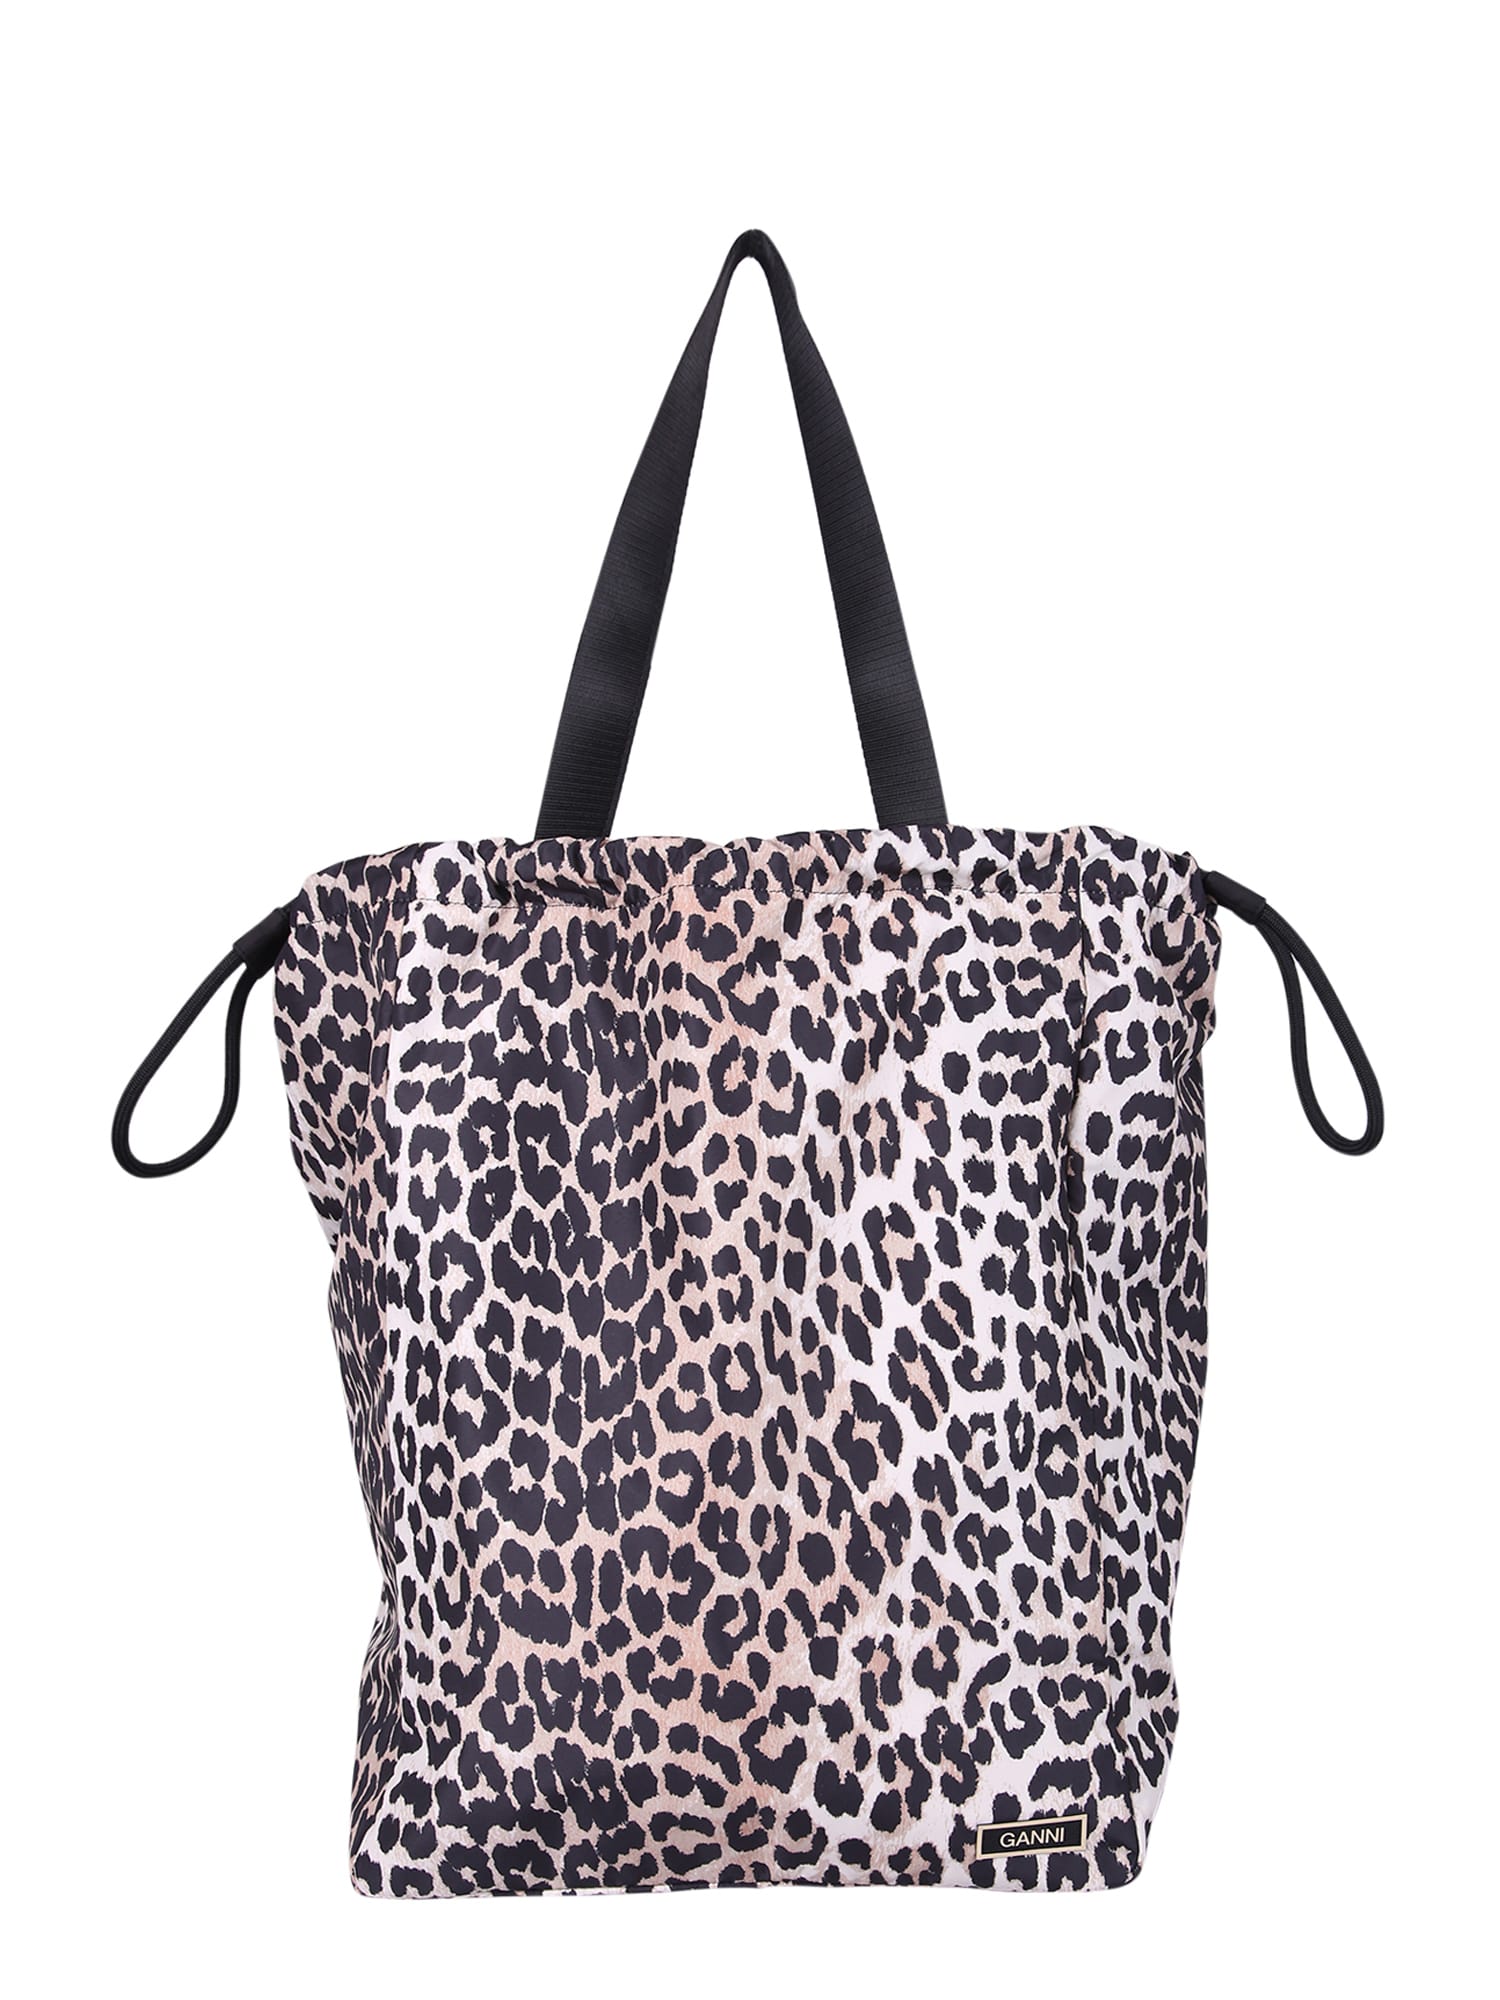 Ganni Leopard Print Bag